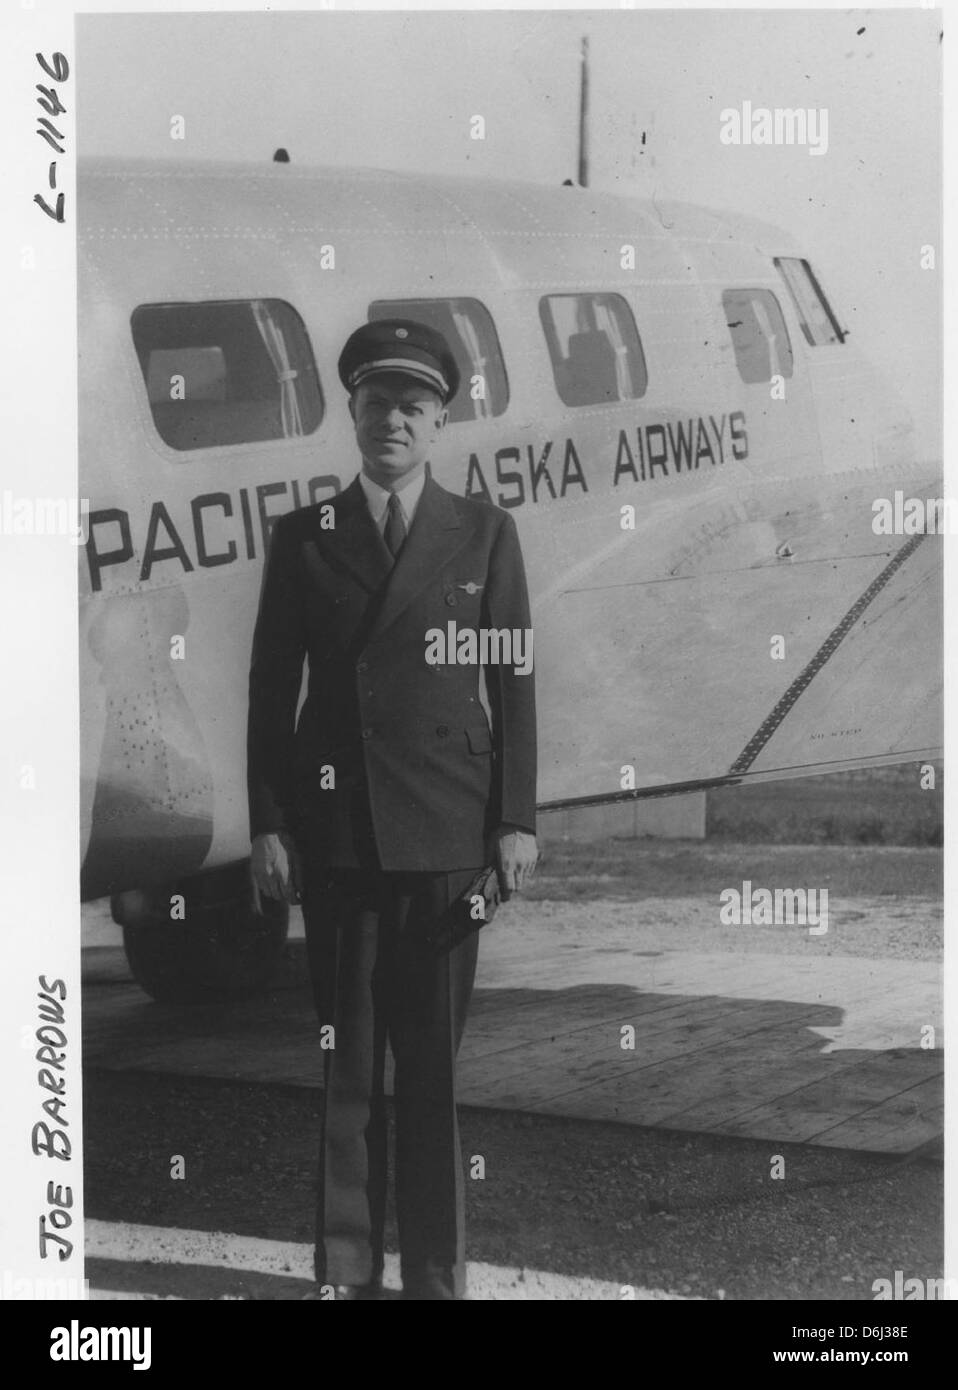 04-02339 Joe Borrows in front of the Pacific Alaska Airways aircraft Stock Photo